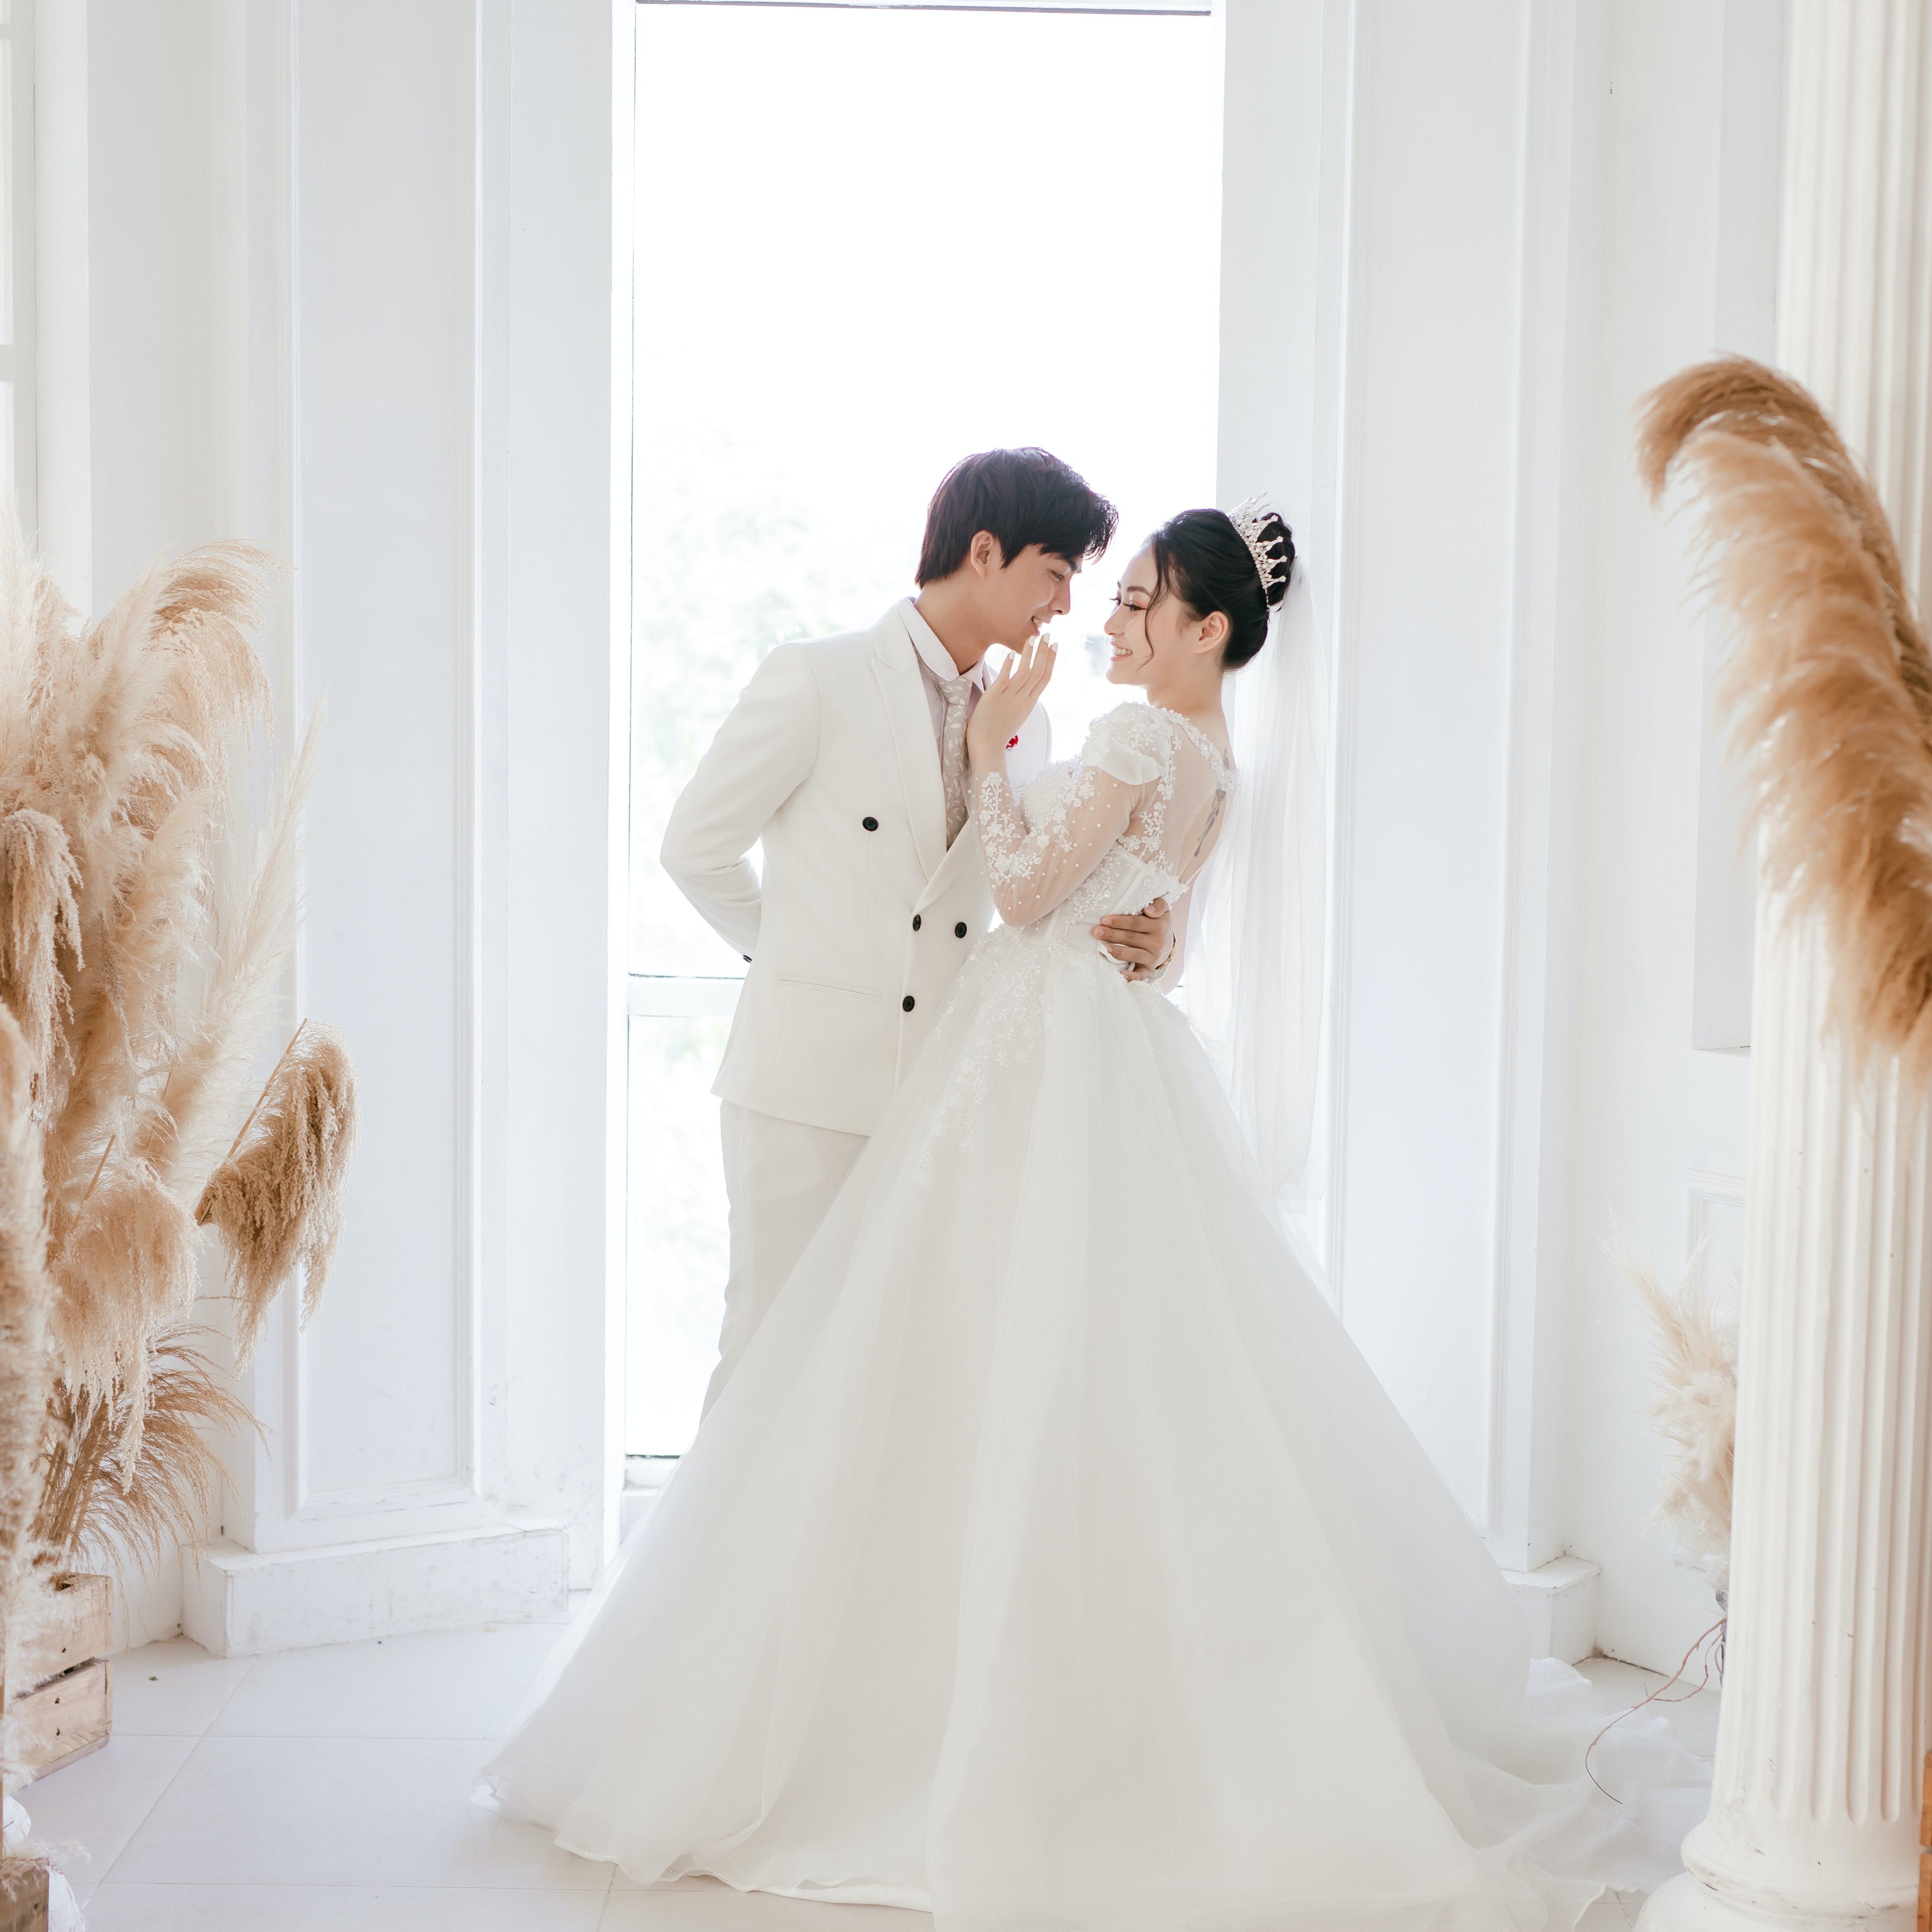 White Wedding Dresses: Choosing The Right Wedding White Dress